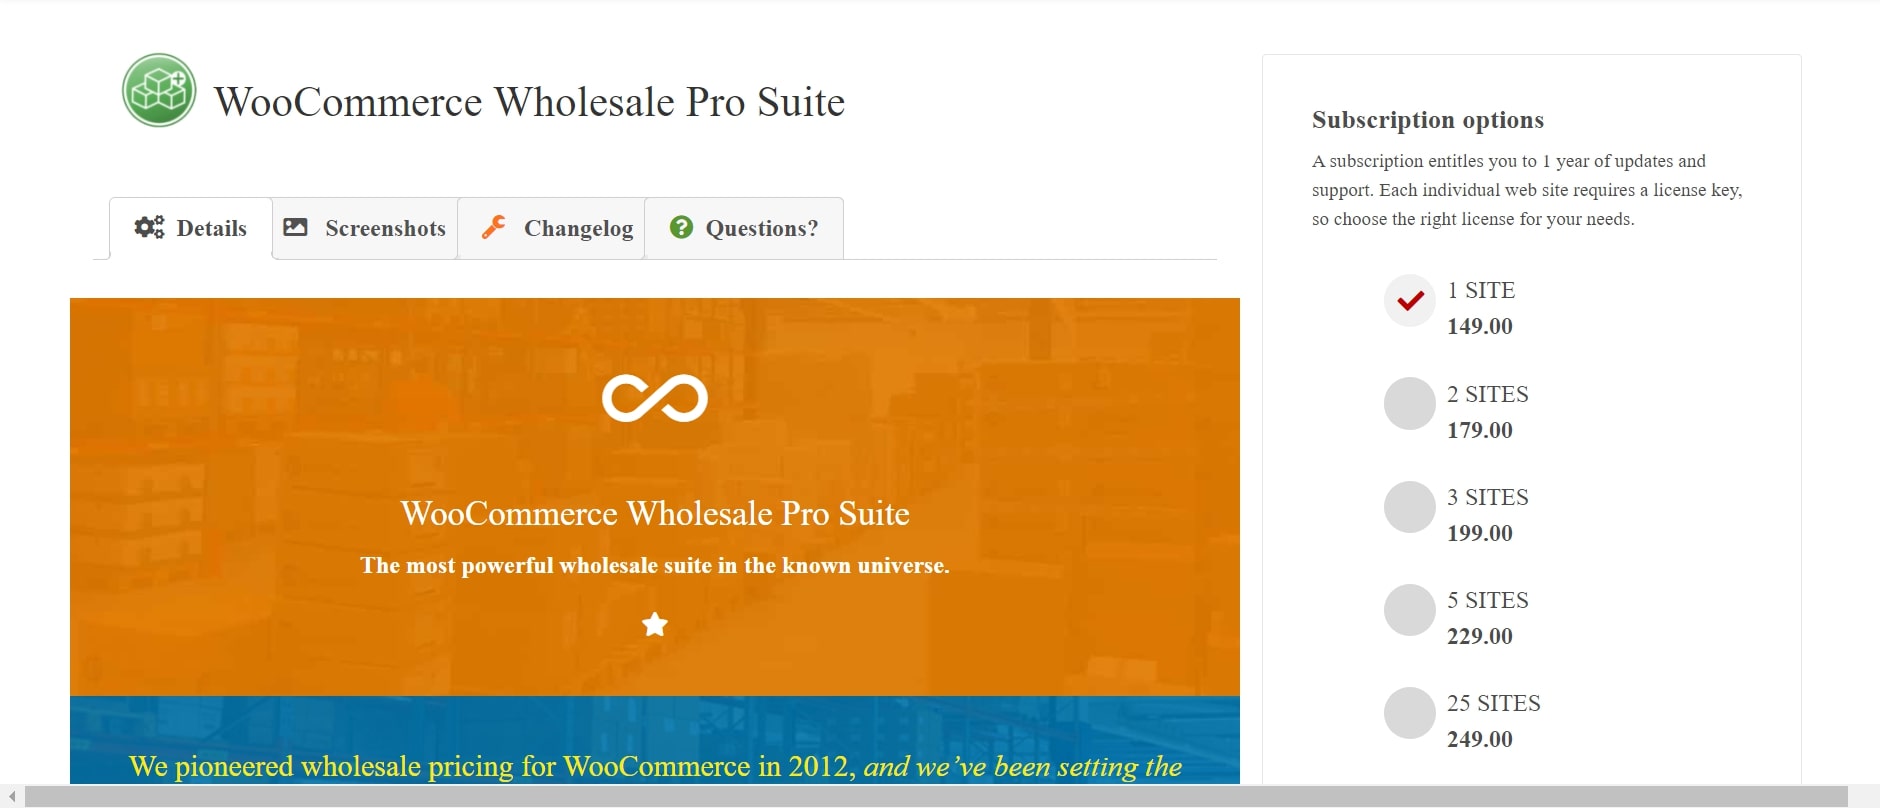 IGNITEWoo – WooCommerce Wholesale Pro Suite